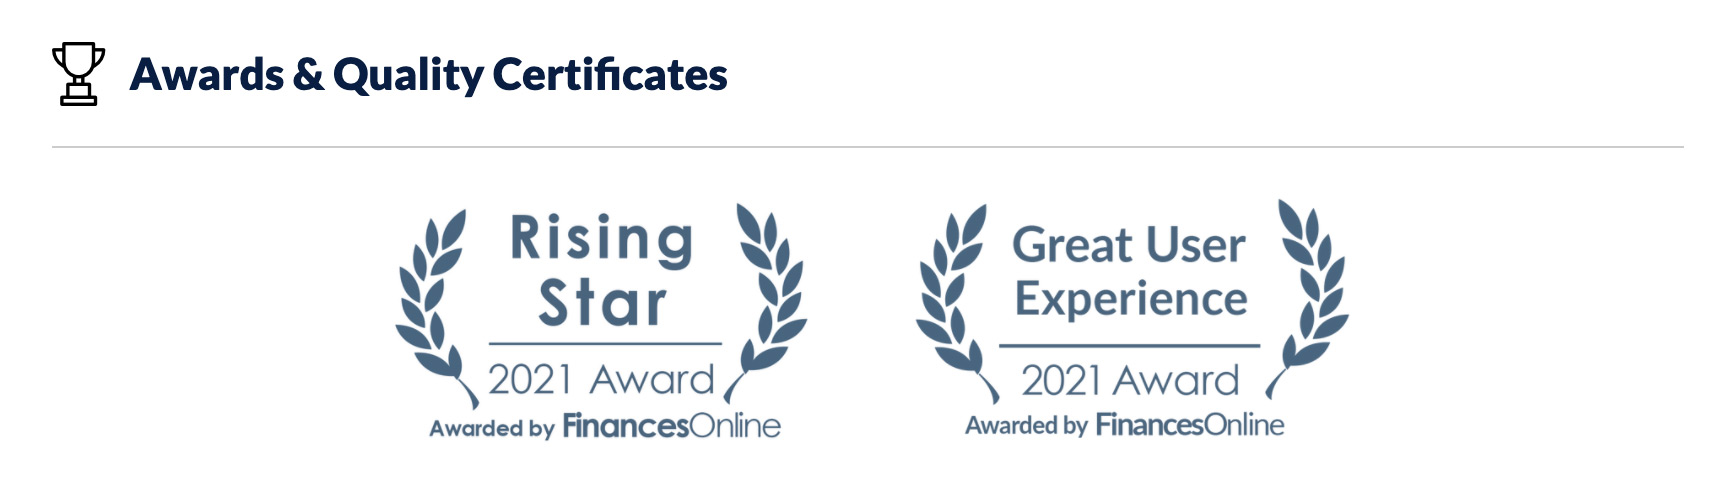 FinacesOnline-awards